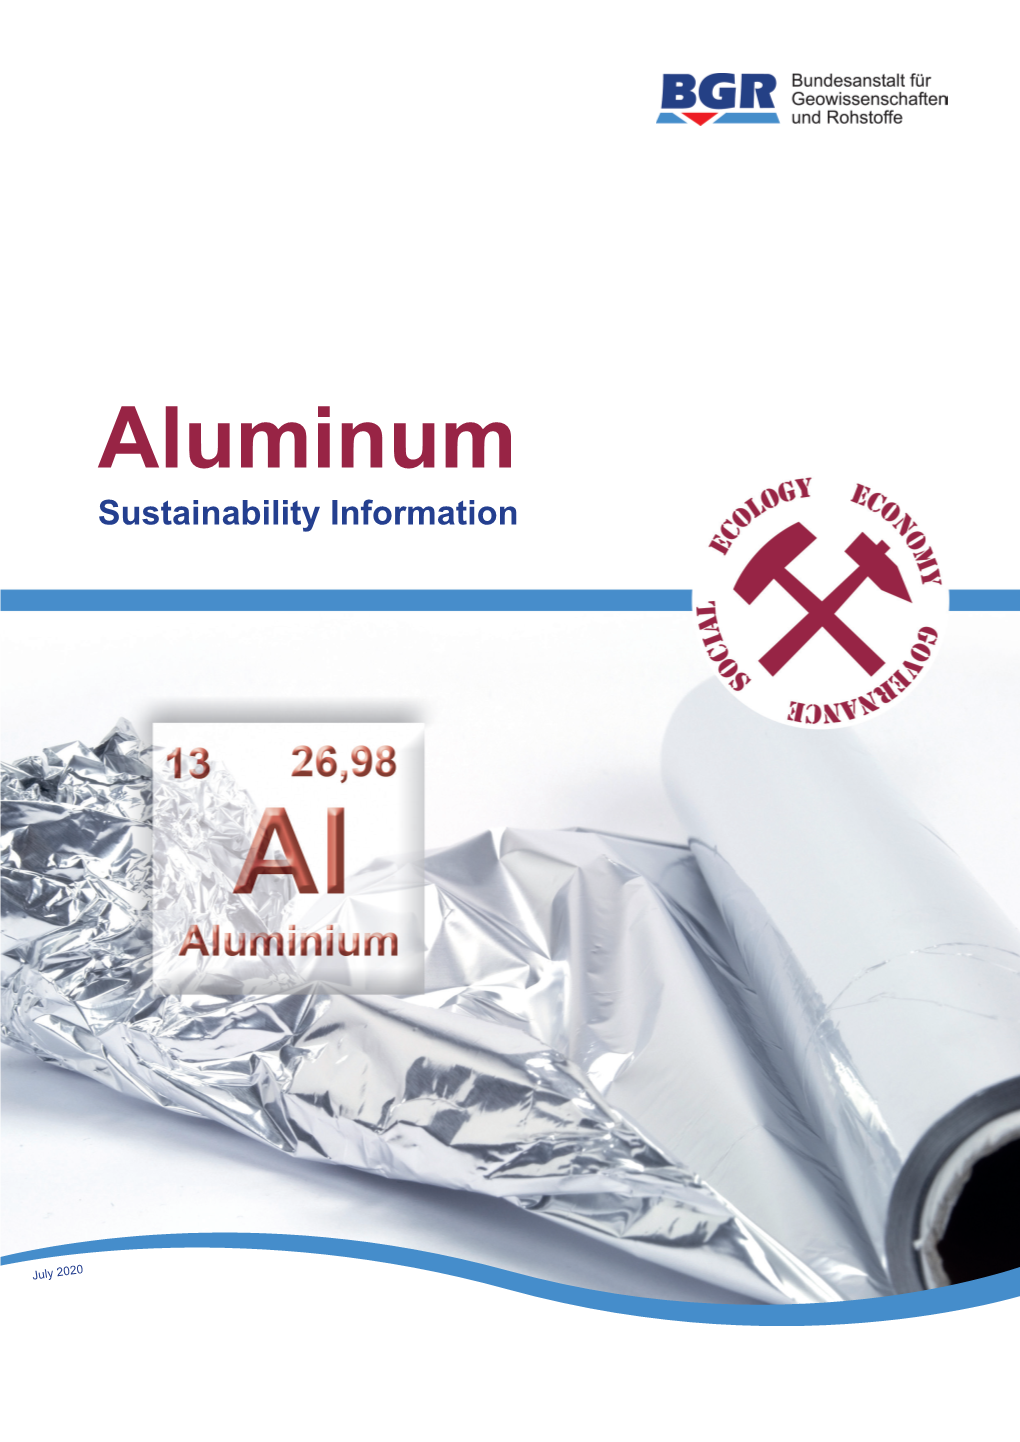 Aluminium – Sustainability Information